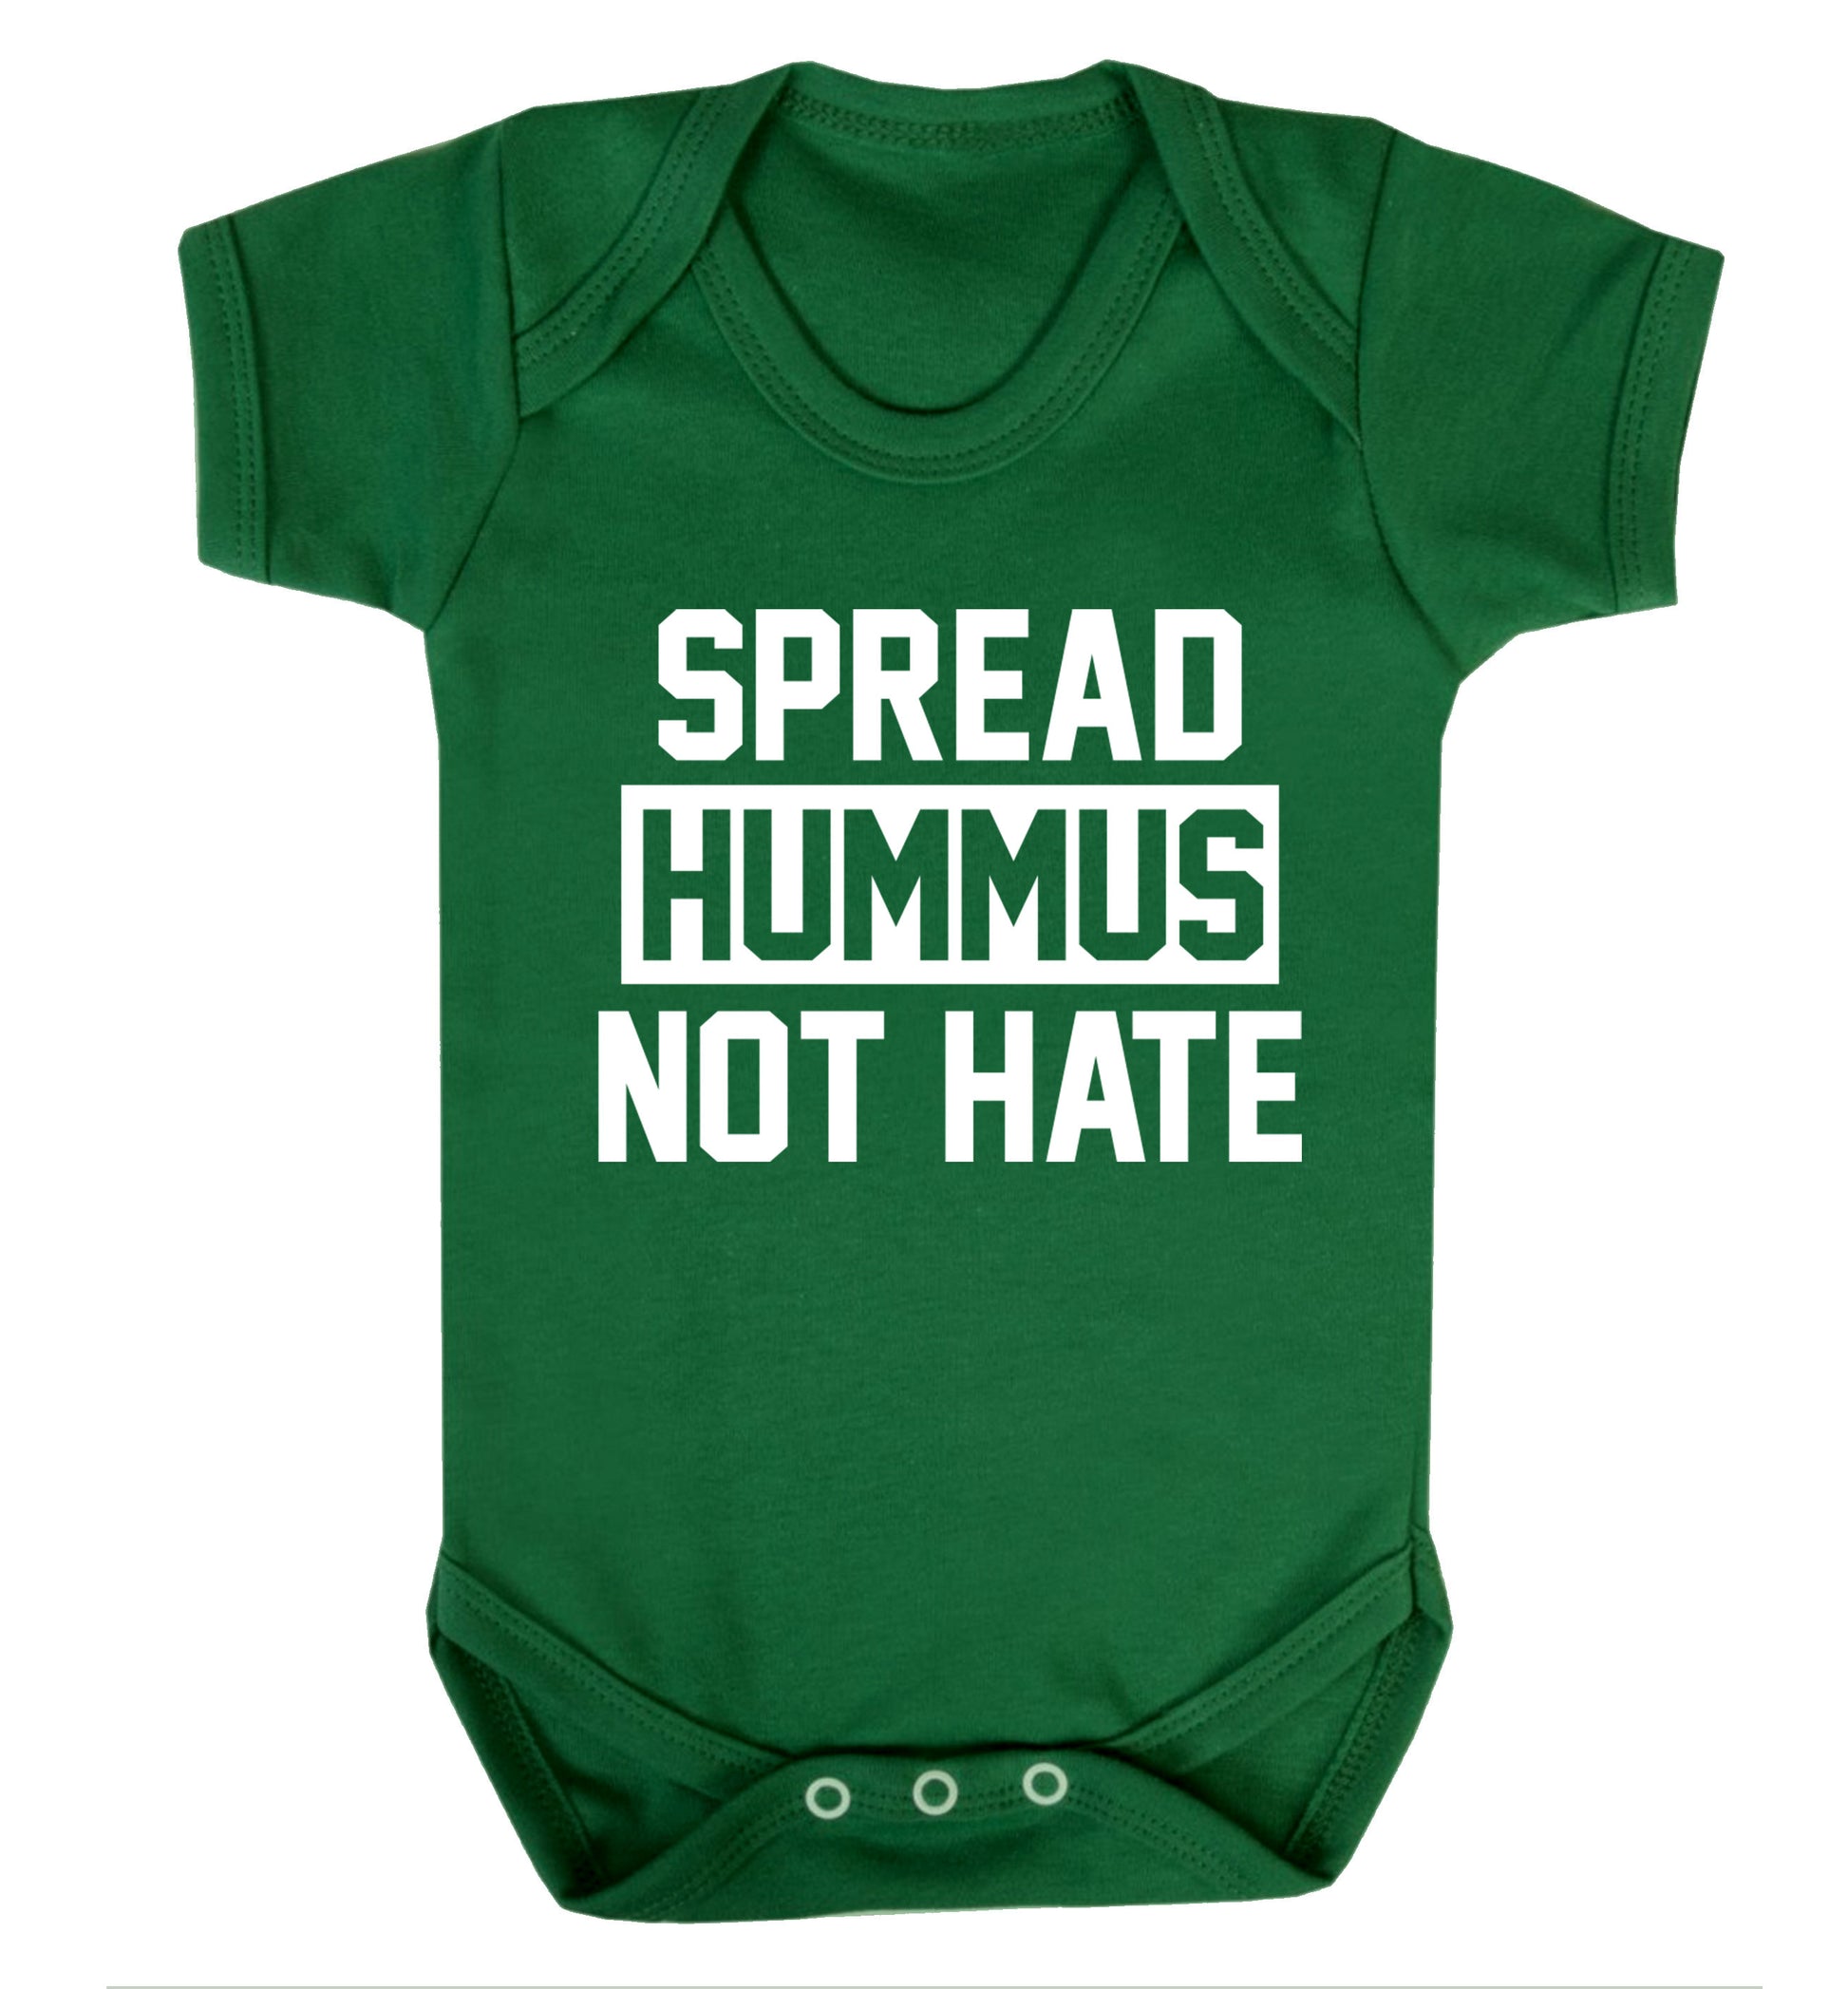 Spread hummus not hate Baby Vest green 18-24 months